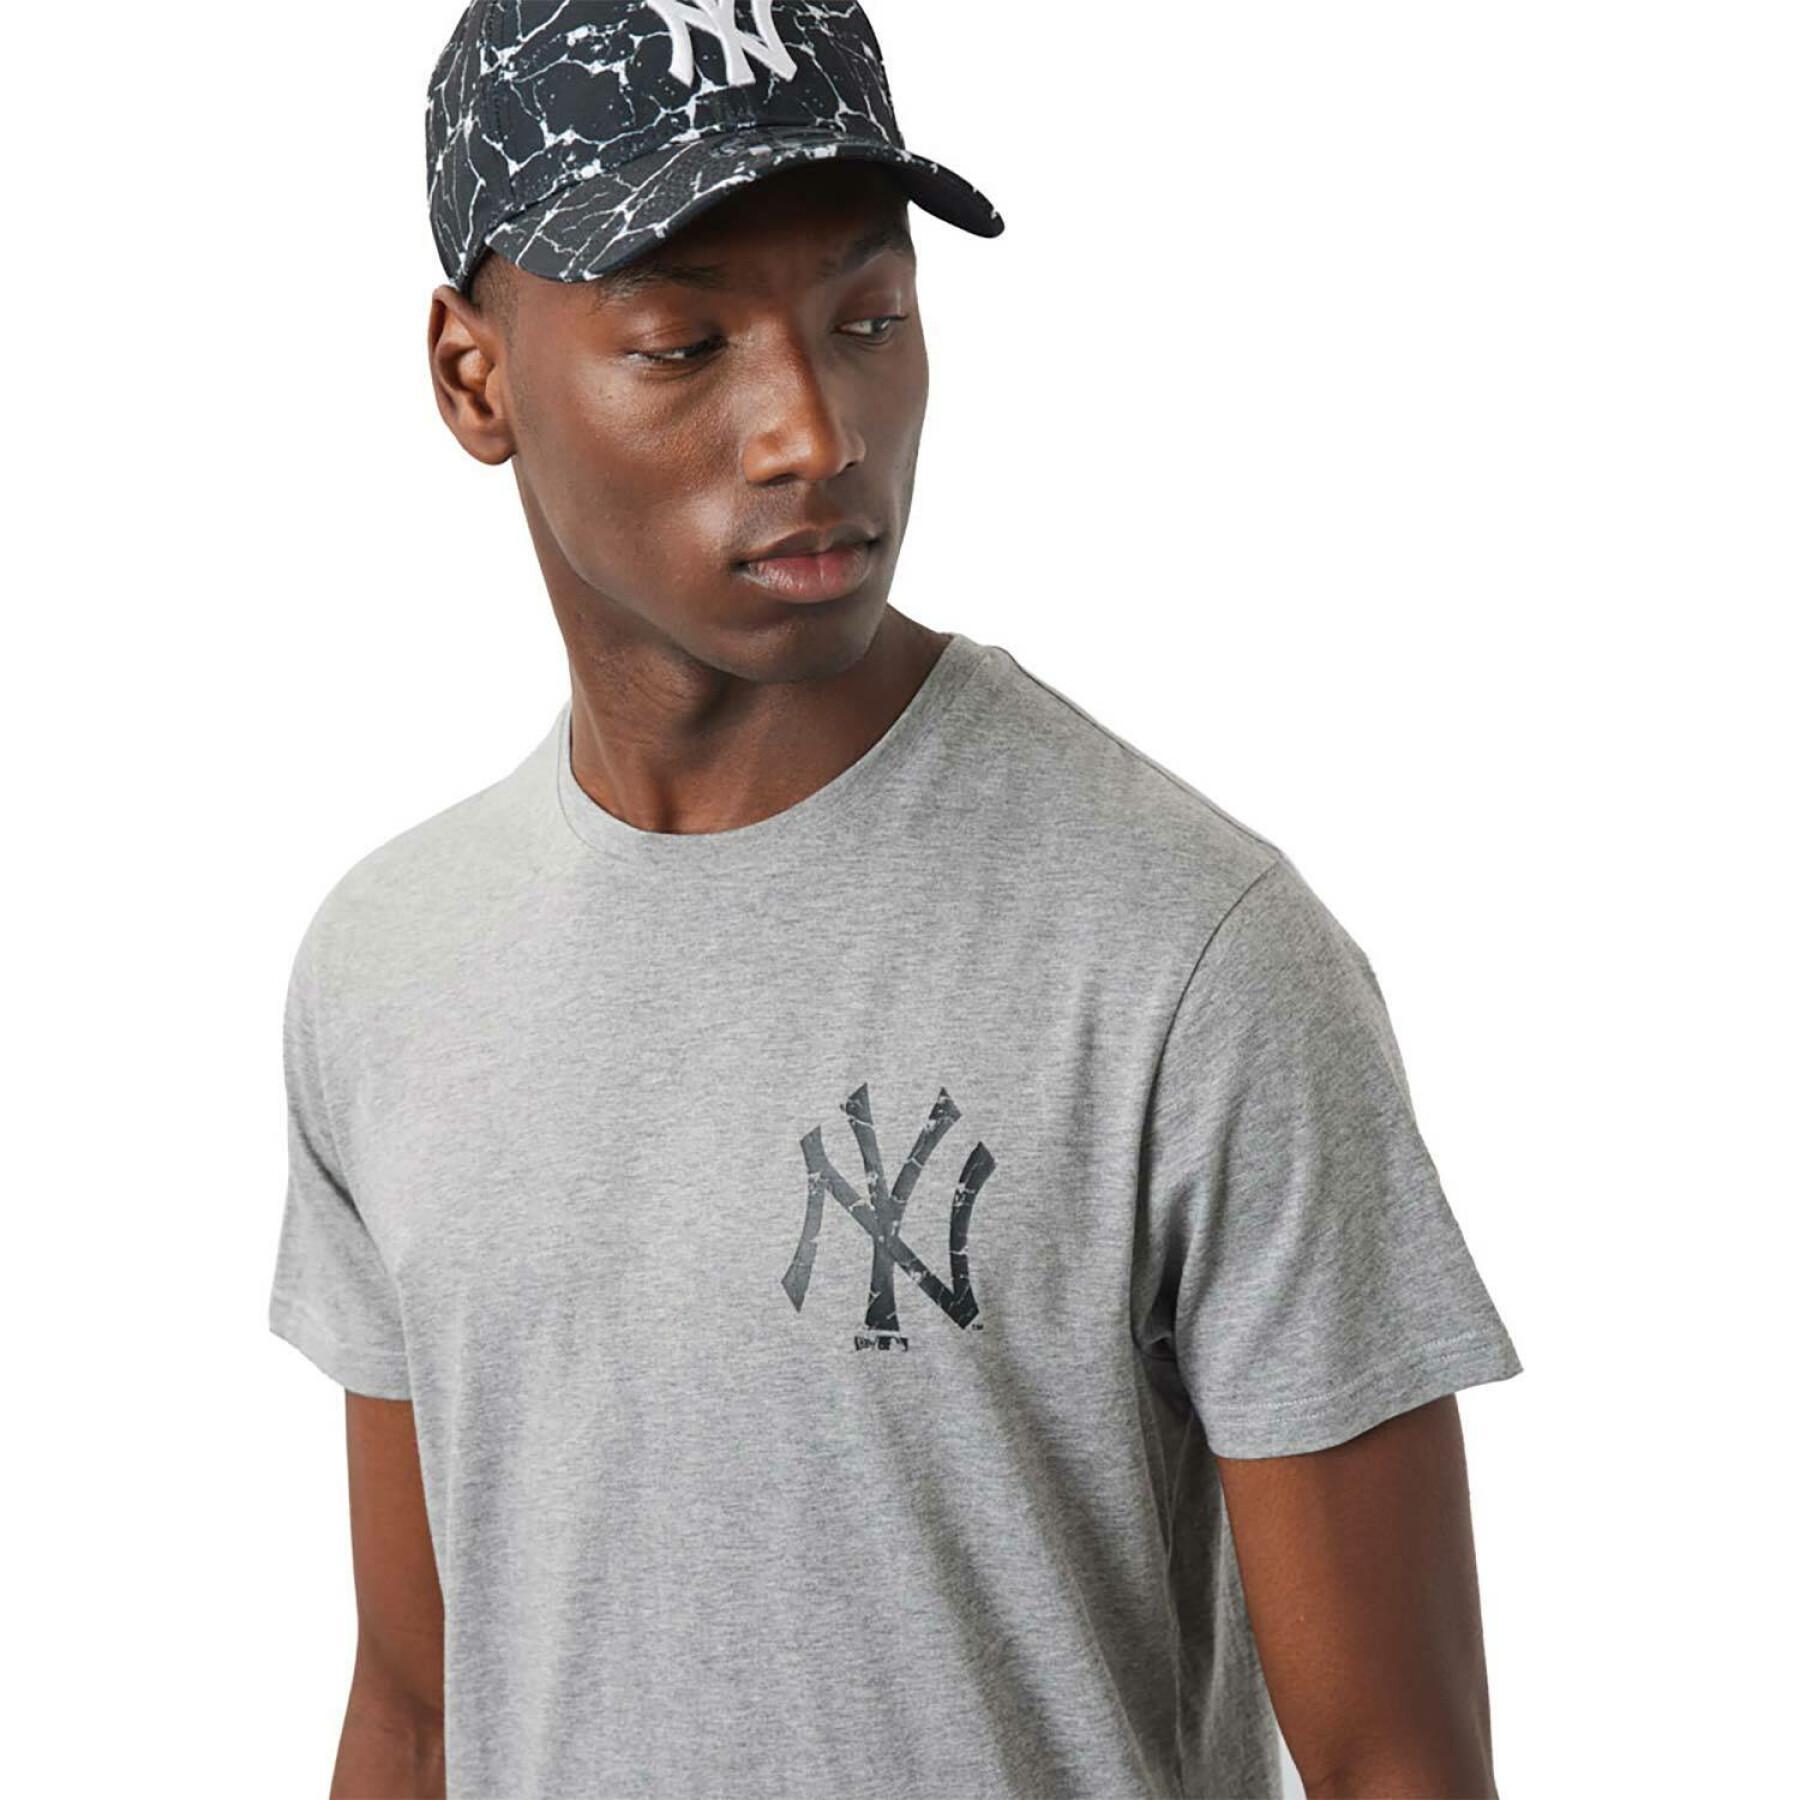 camiseta de temporada de la mlb New York Yankees